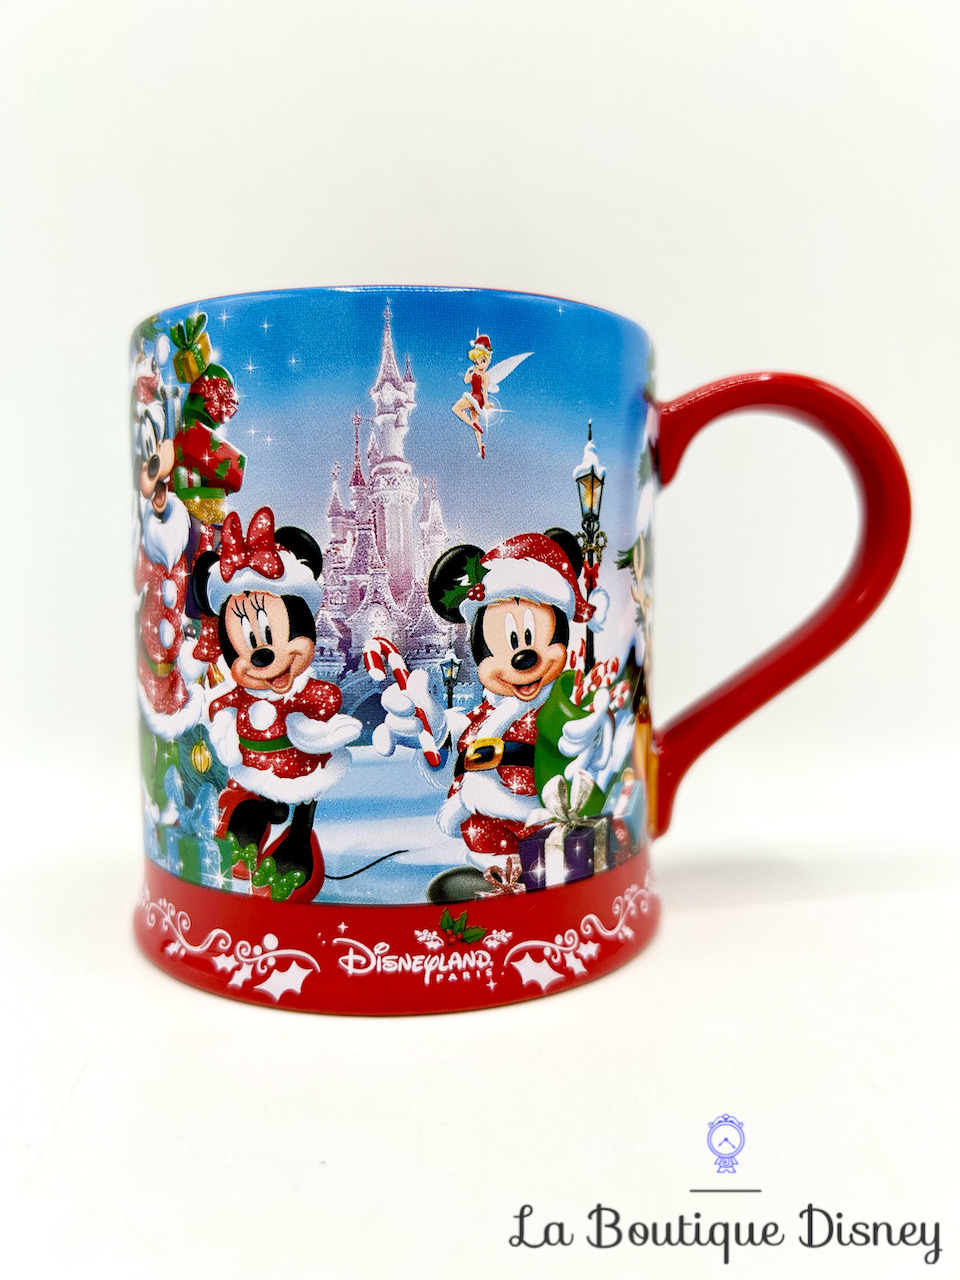 Tasse Mickey et ses amis Joyeux Noël Disneyland Paris mug Disney neige sapin rouge